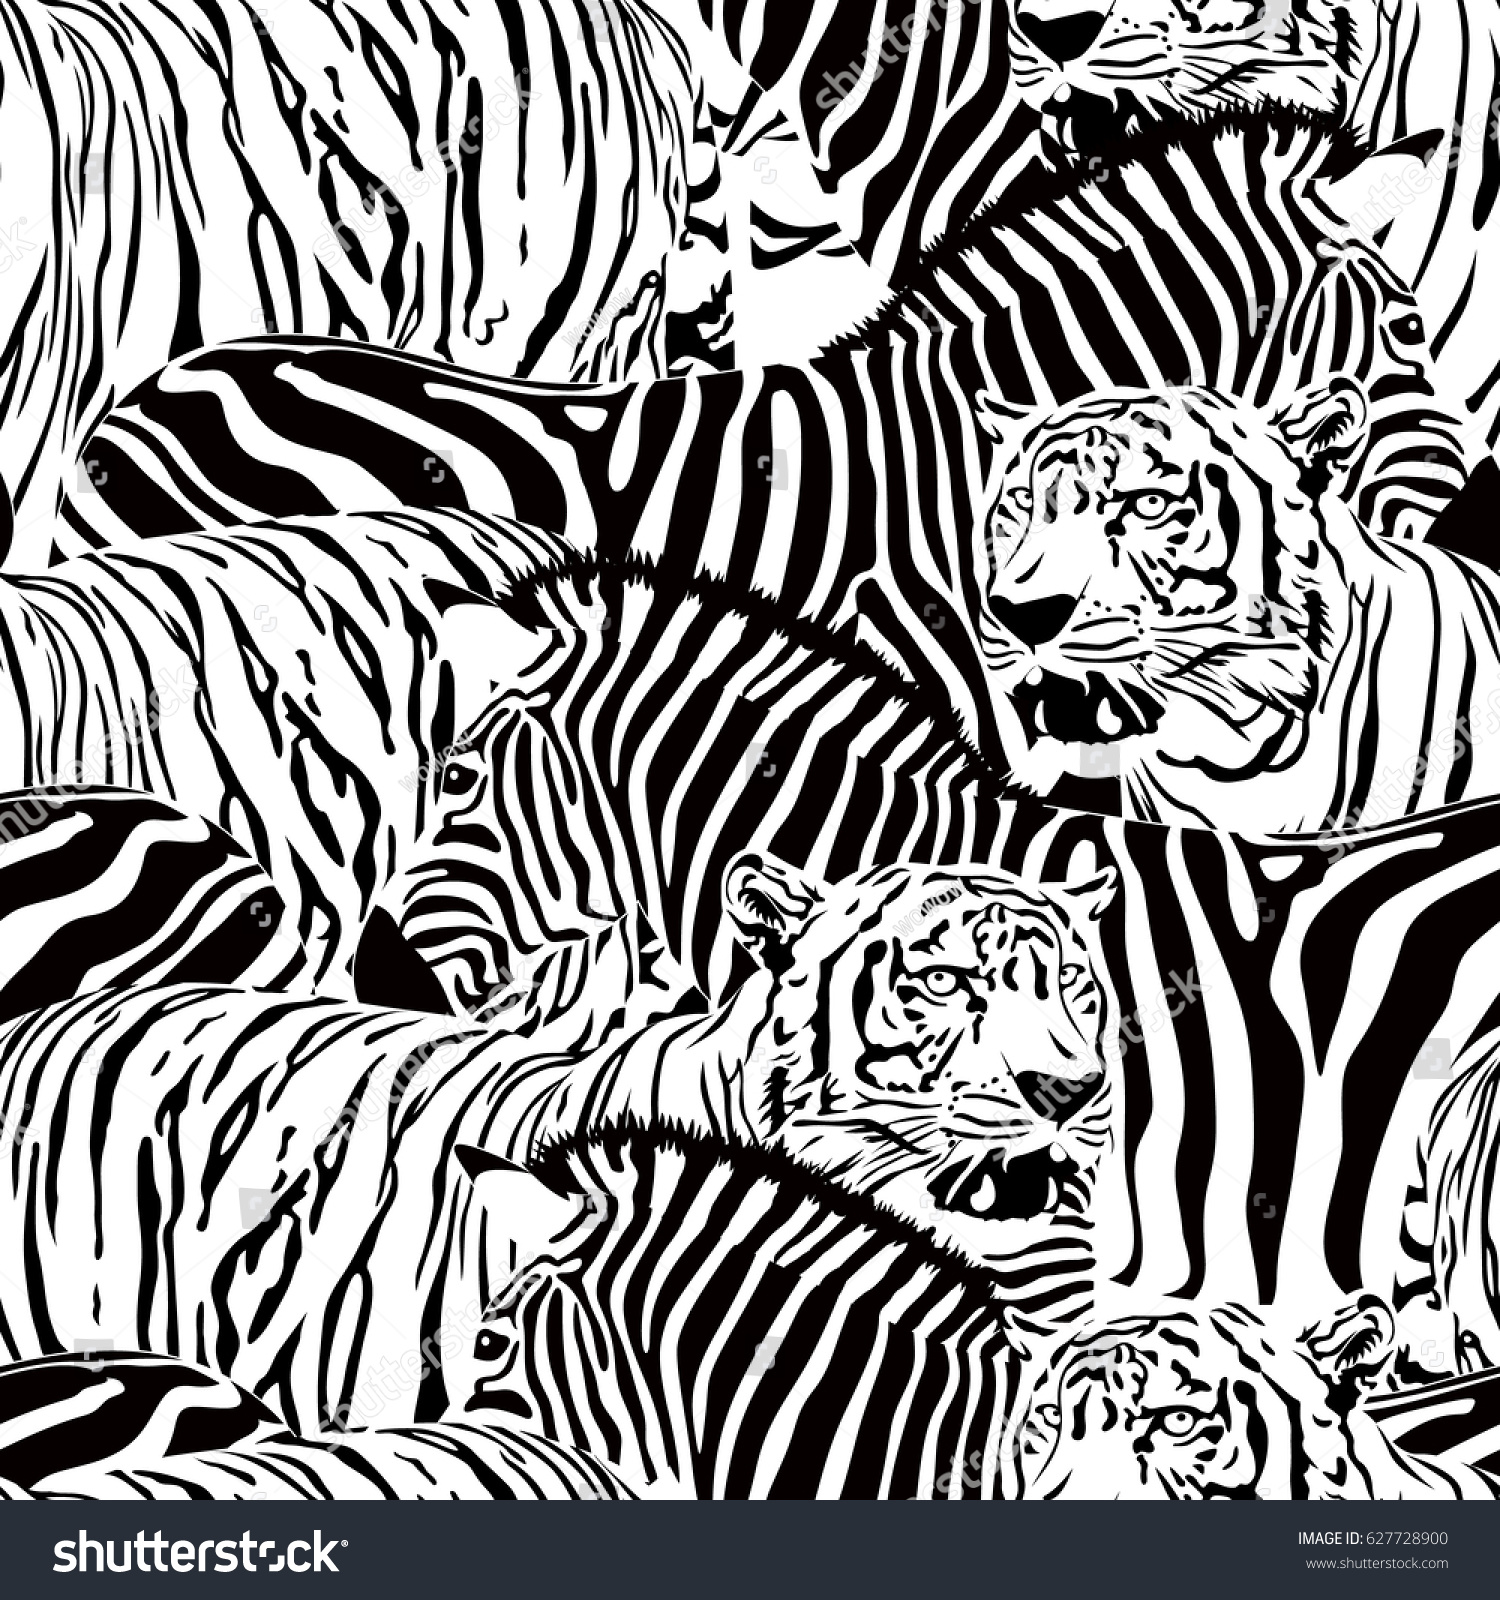 Tiger Zebra Seamless Pattern Wild Life Stock Vector (Royalty Free ...